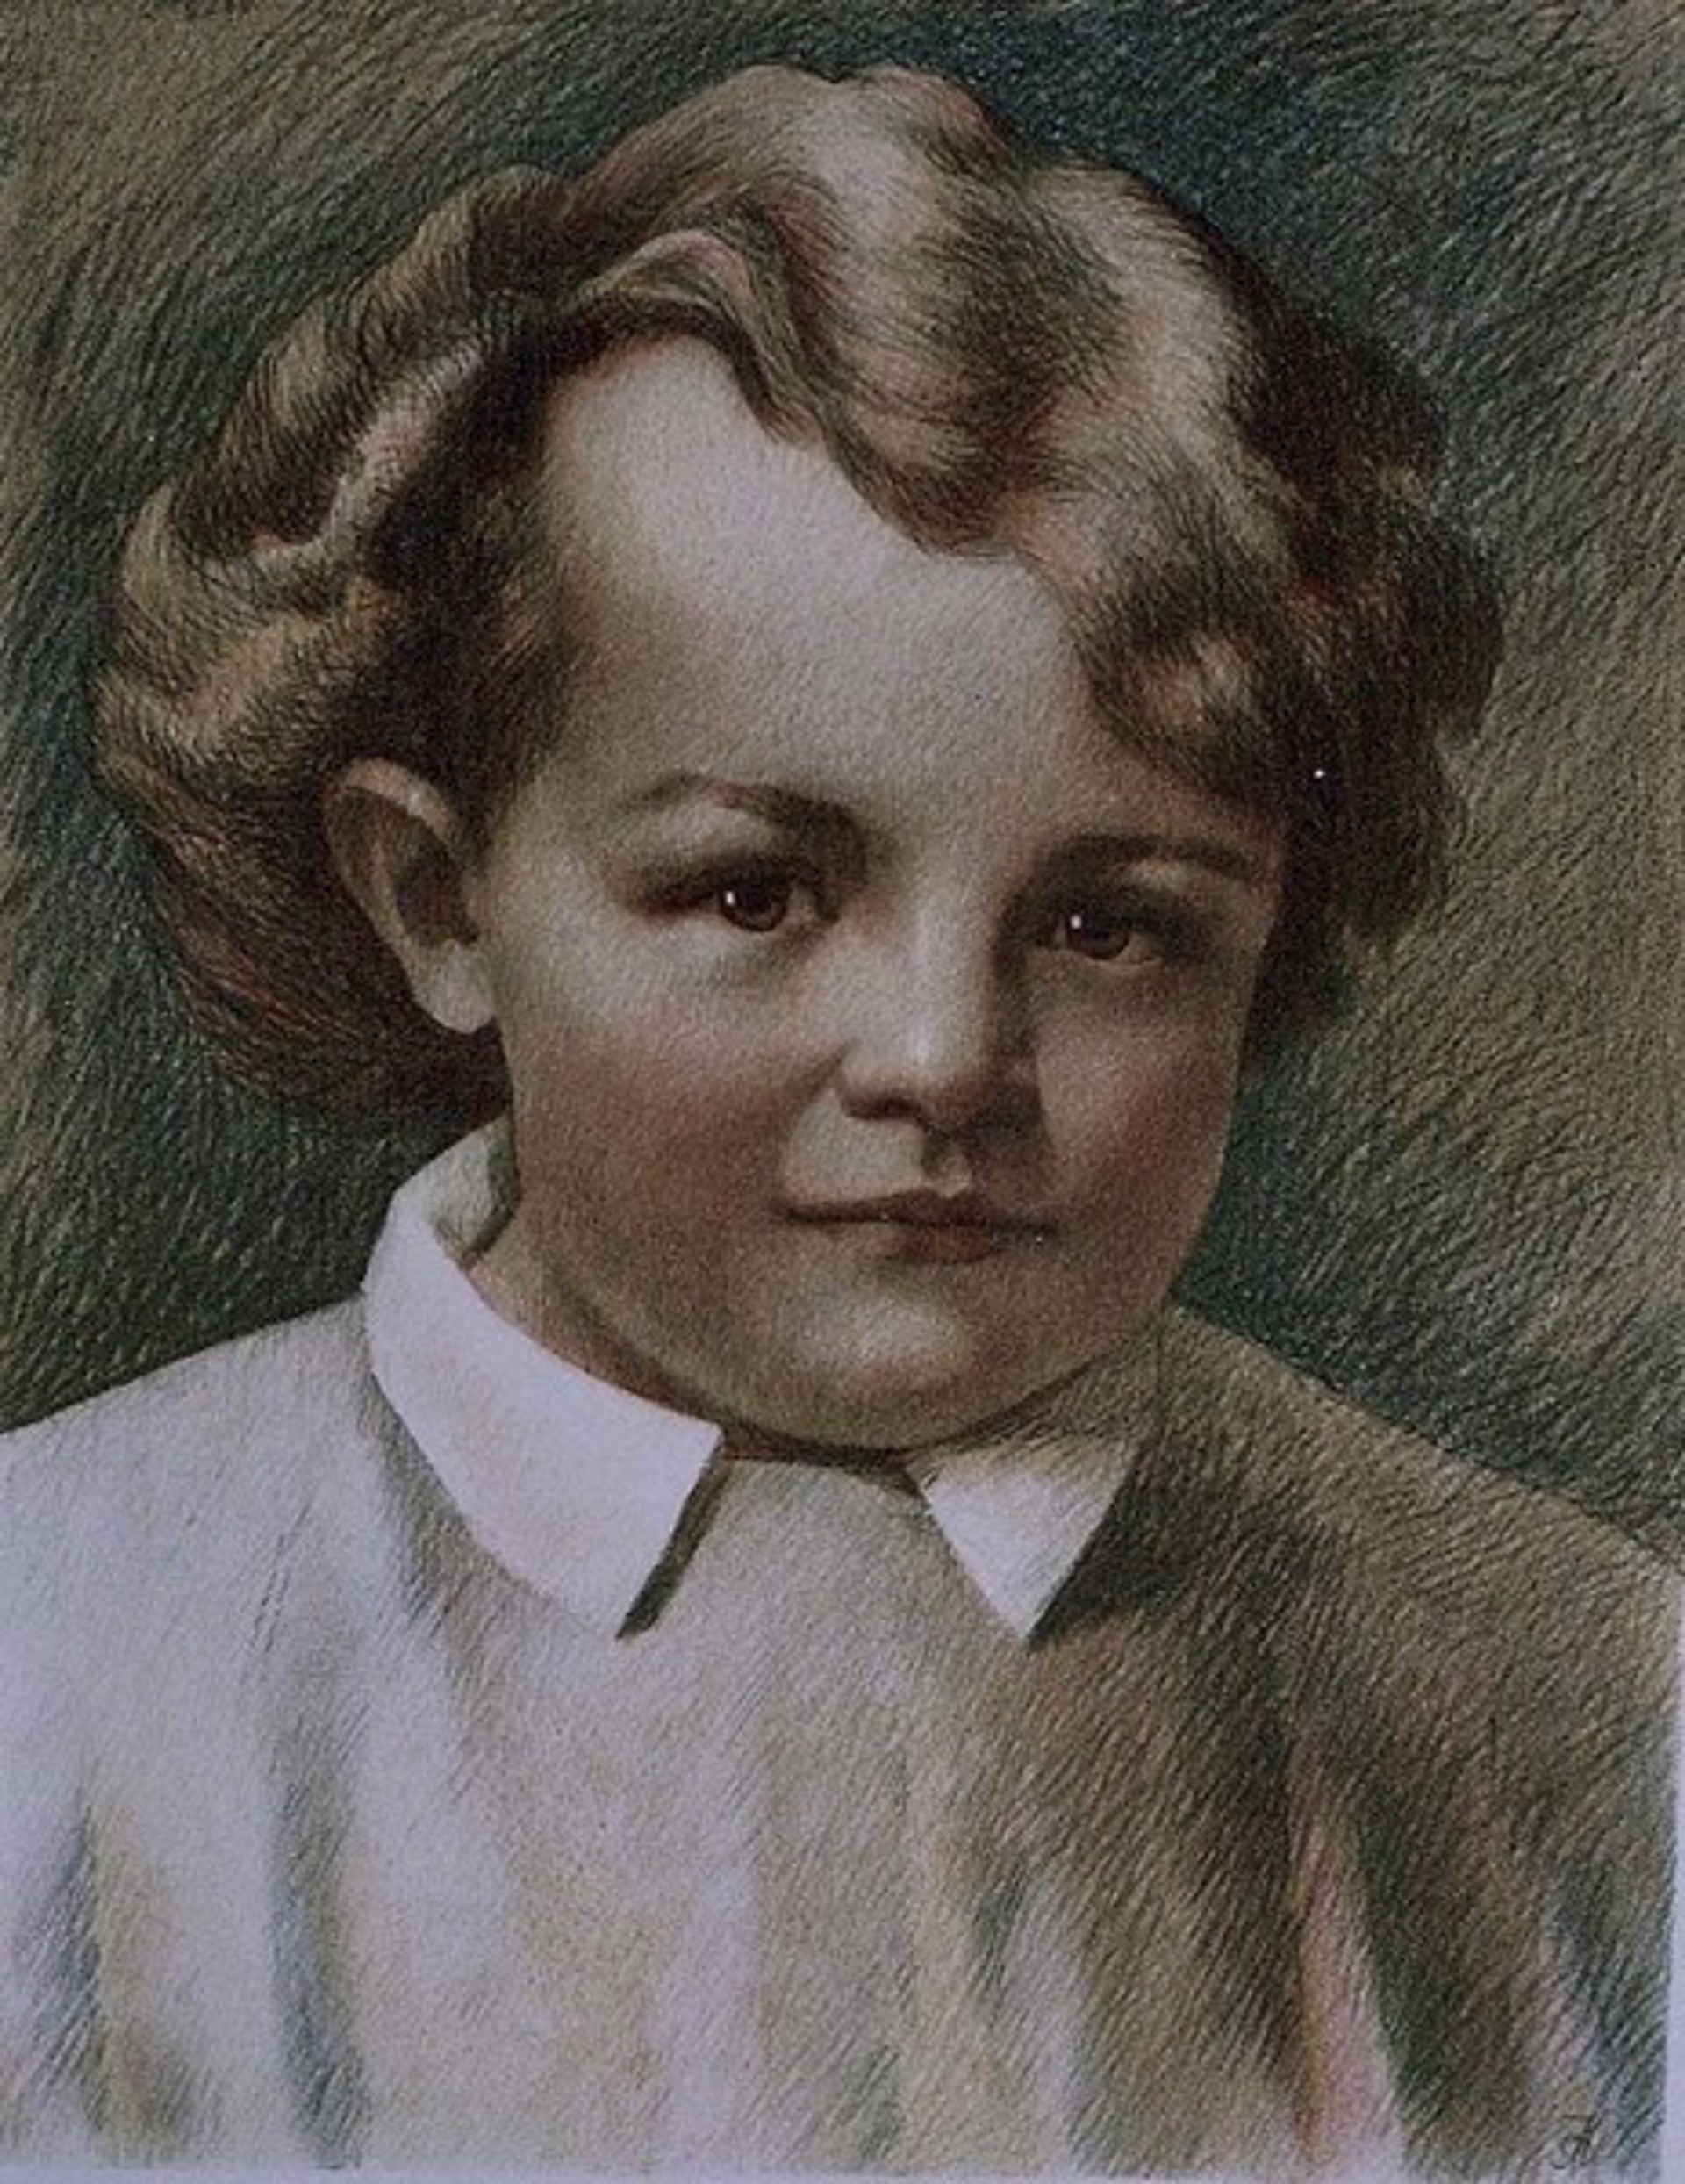 Lenin As Child by Alexander Ivanhenko